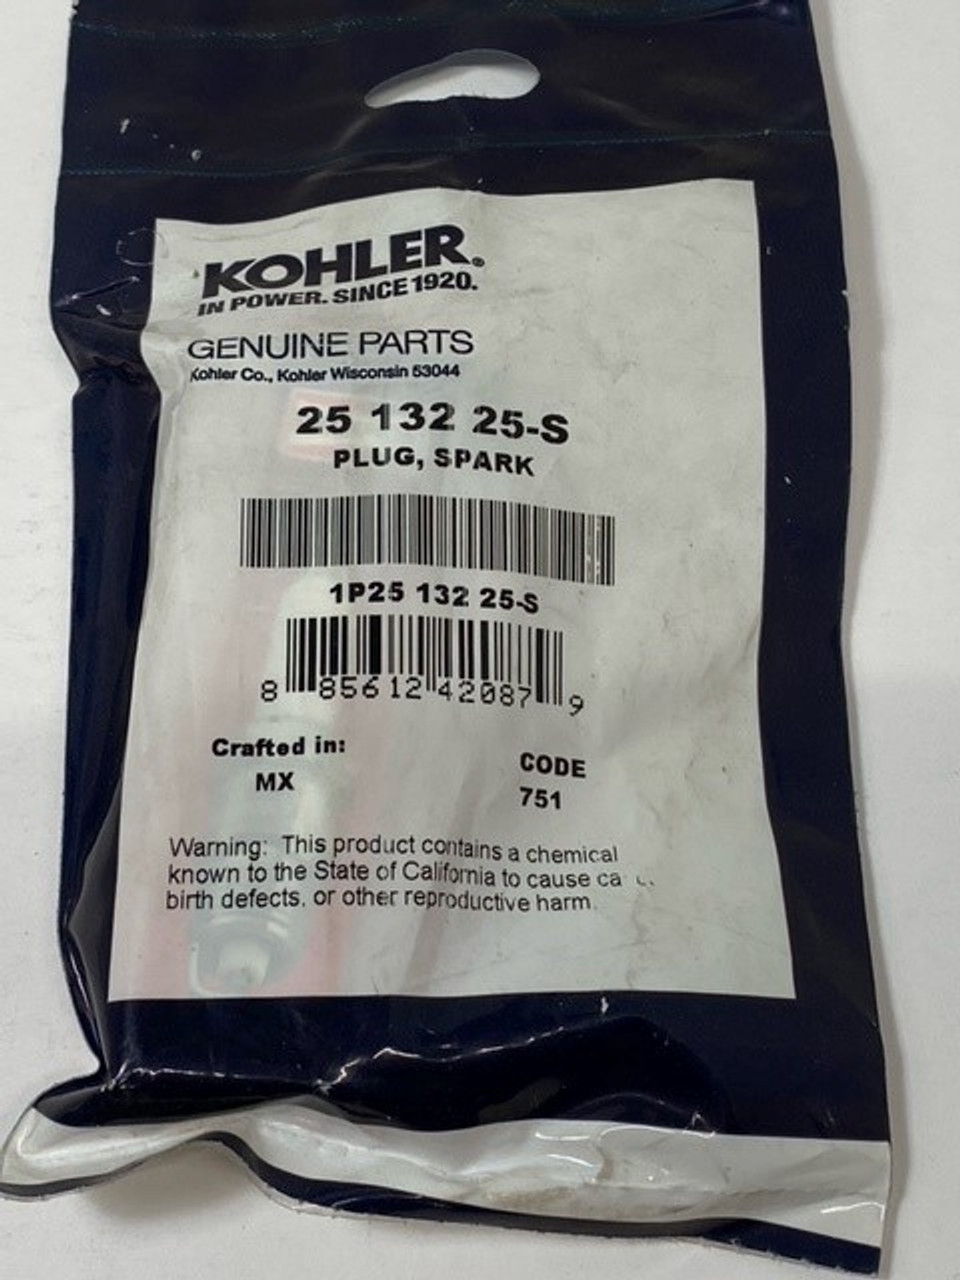 Kohler 25 132 25-S Plug, Spark